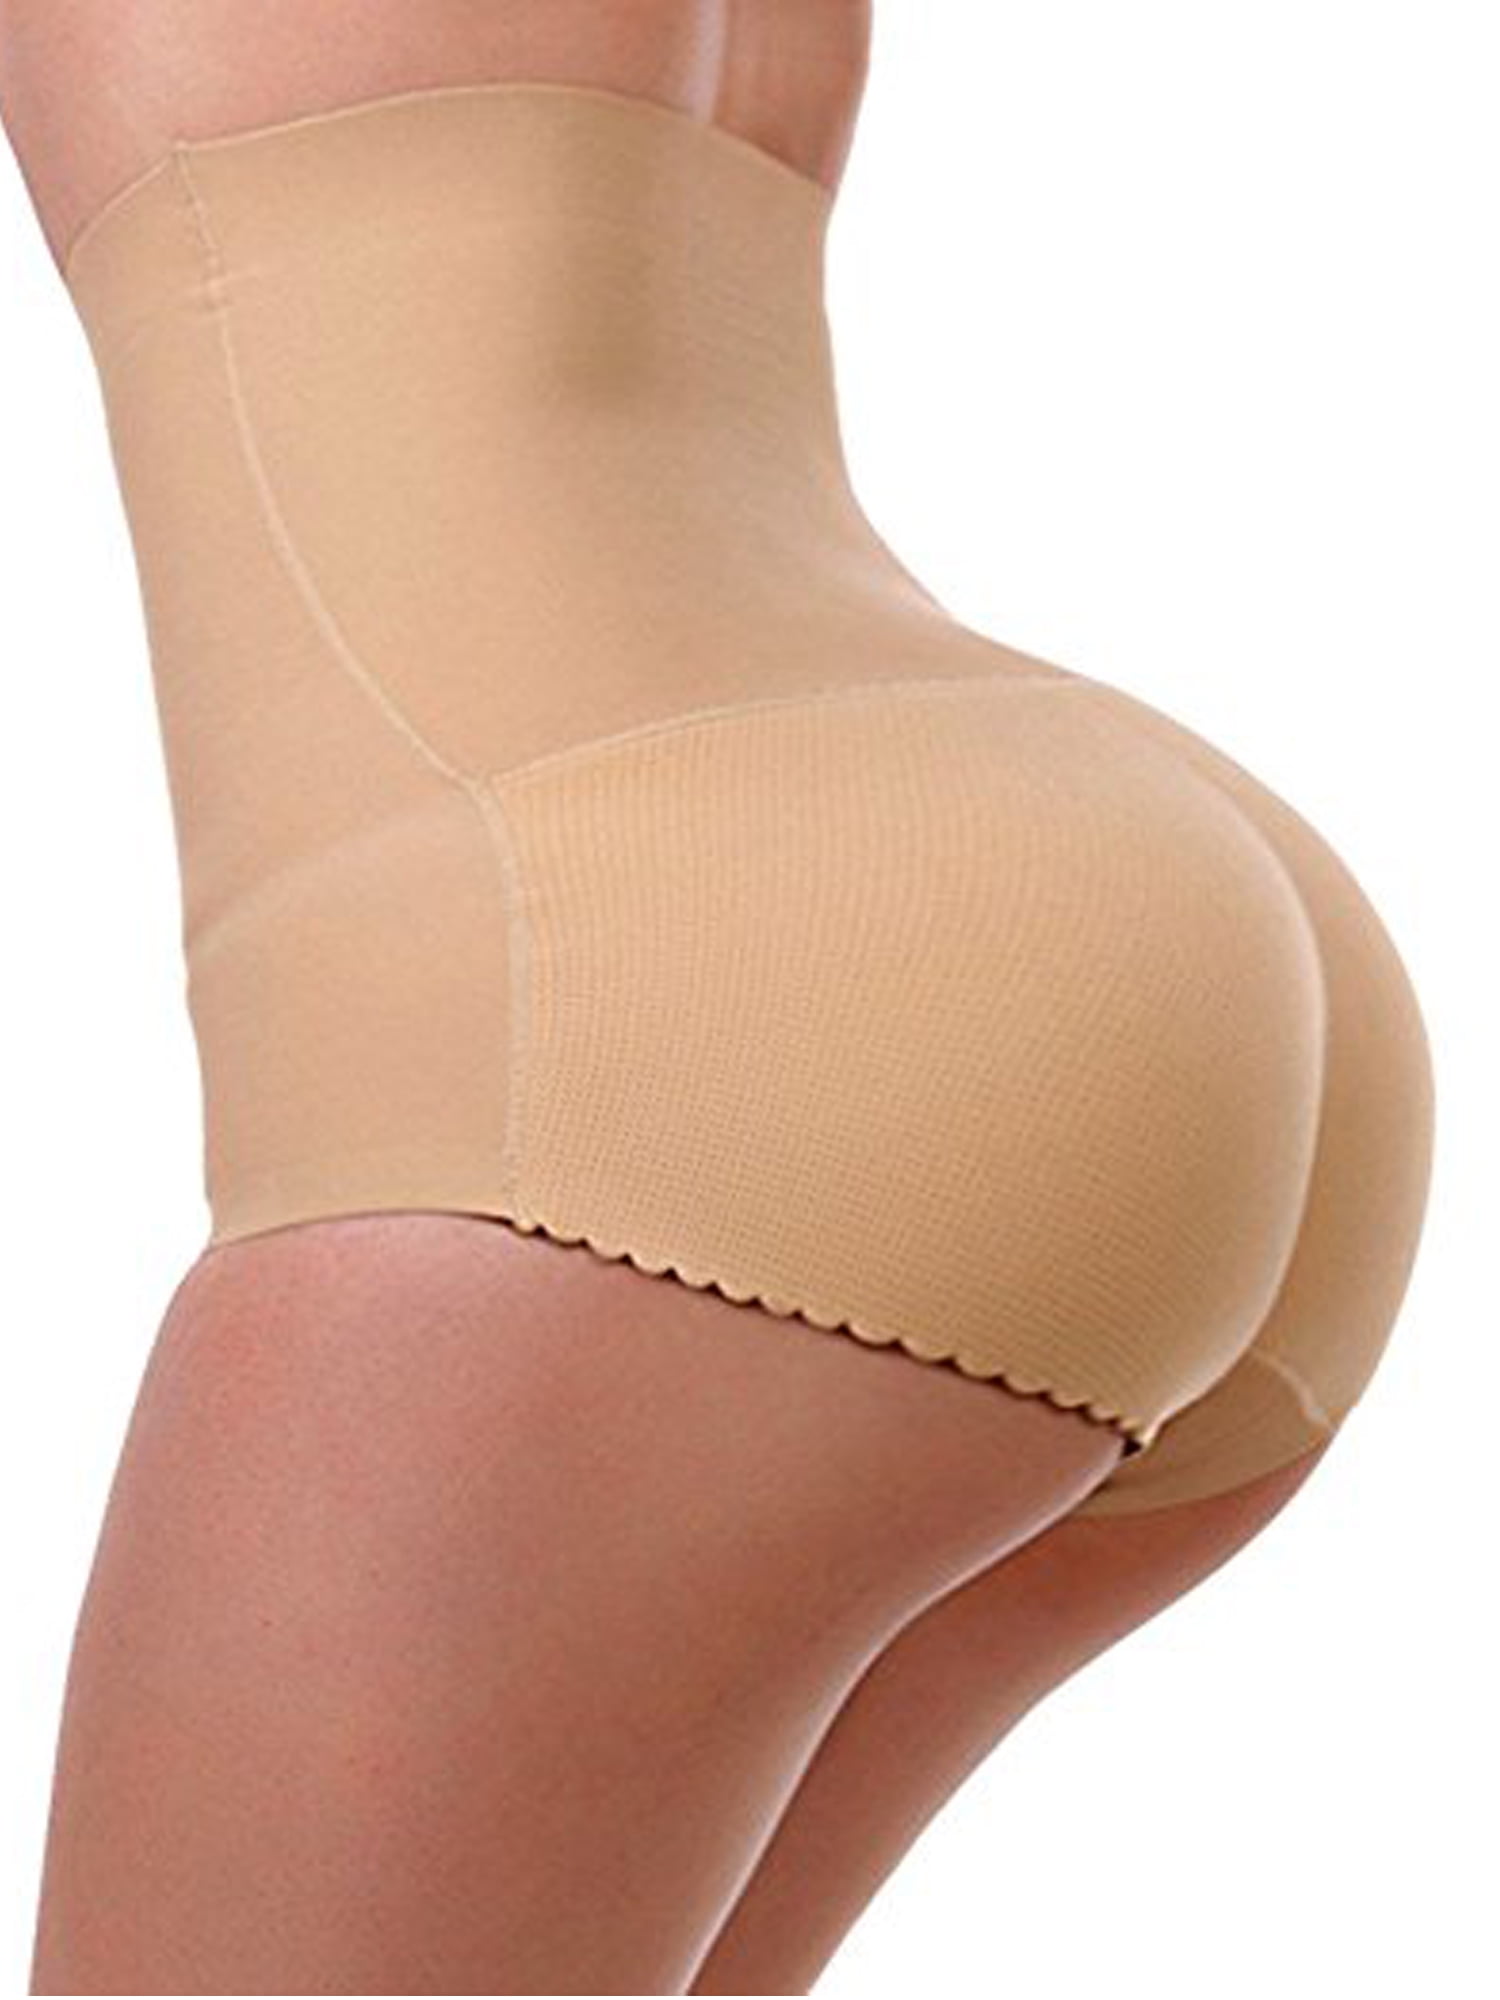 USA Buttock Padded Underwear Bum Lift Shaper Enhancer Pants Body Shapewear S-3XL